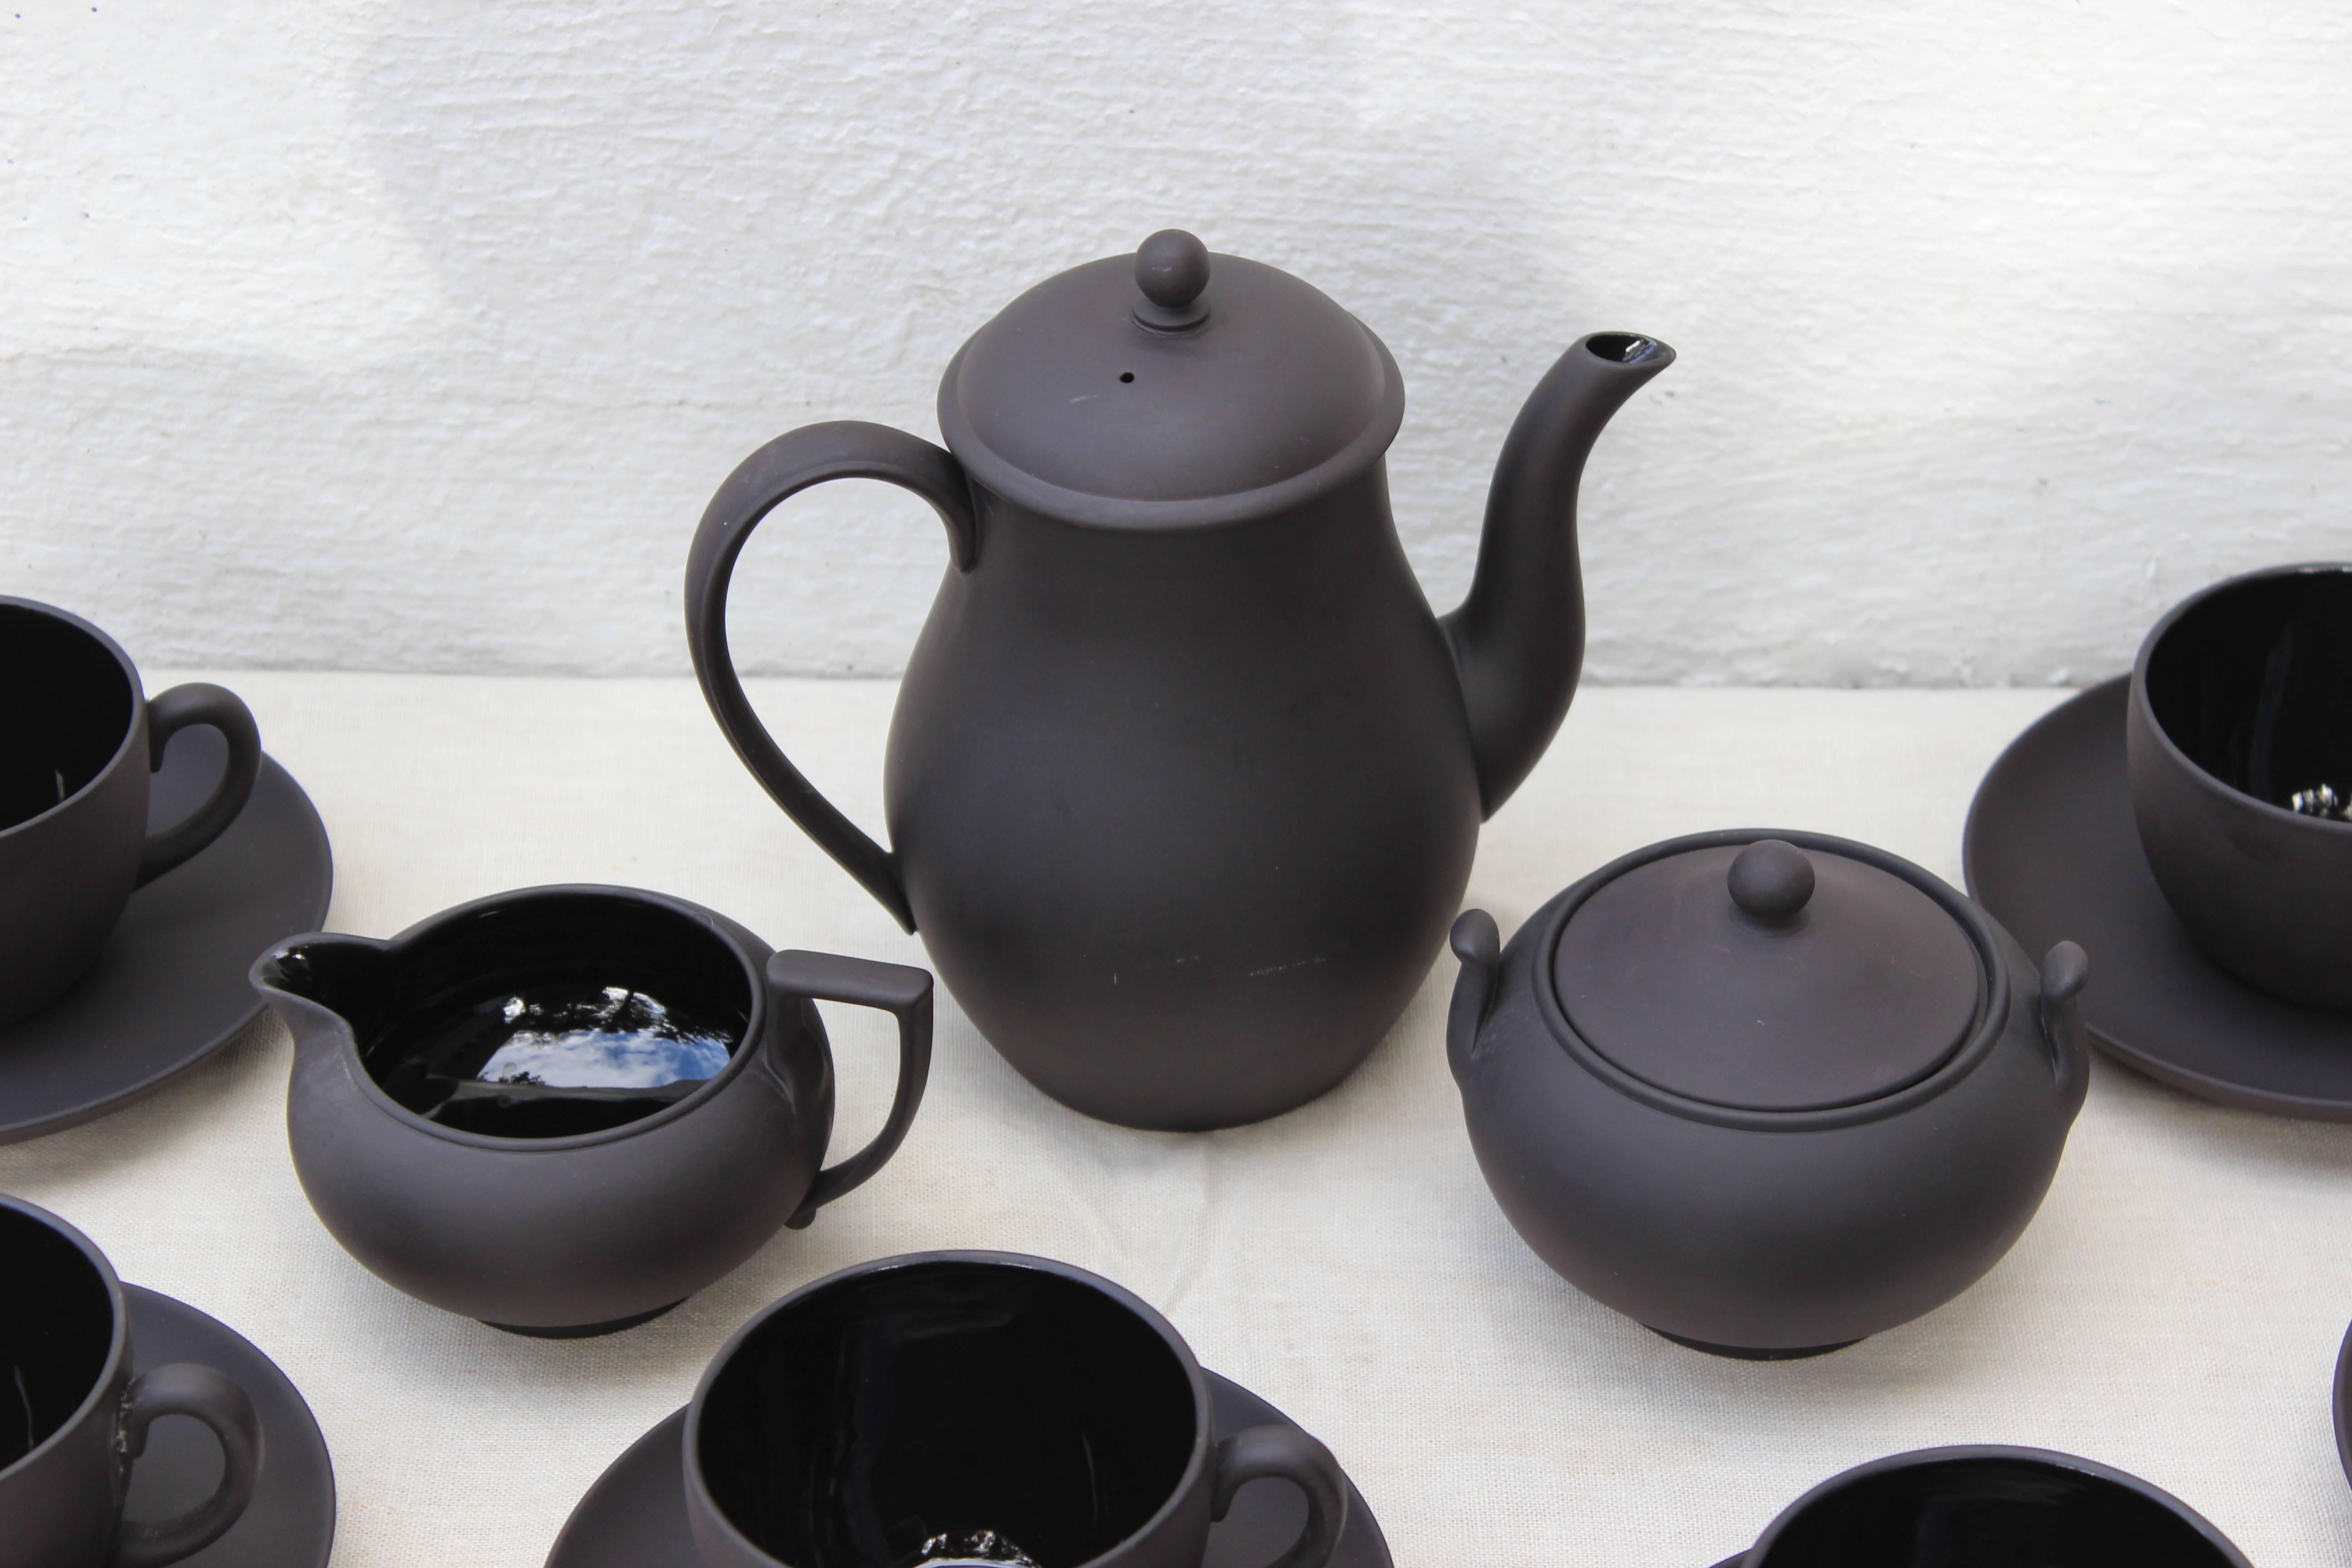 Basalt Wedgwood tea set consists of:

Measures: Tea pot - 6.75